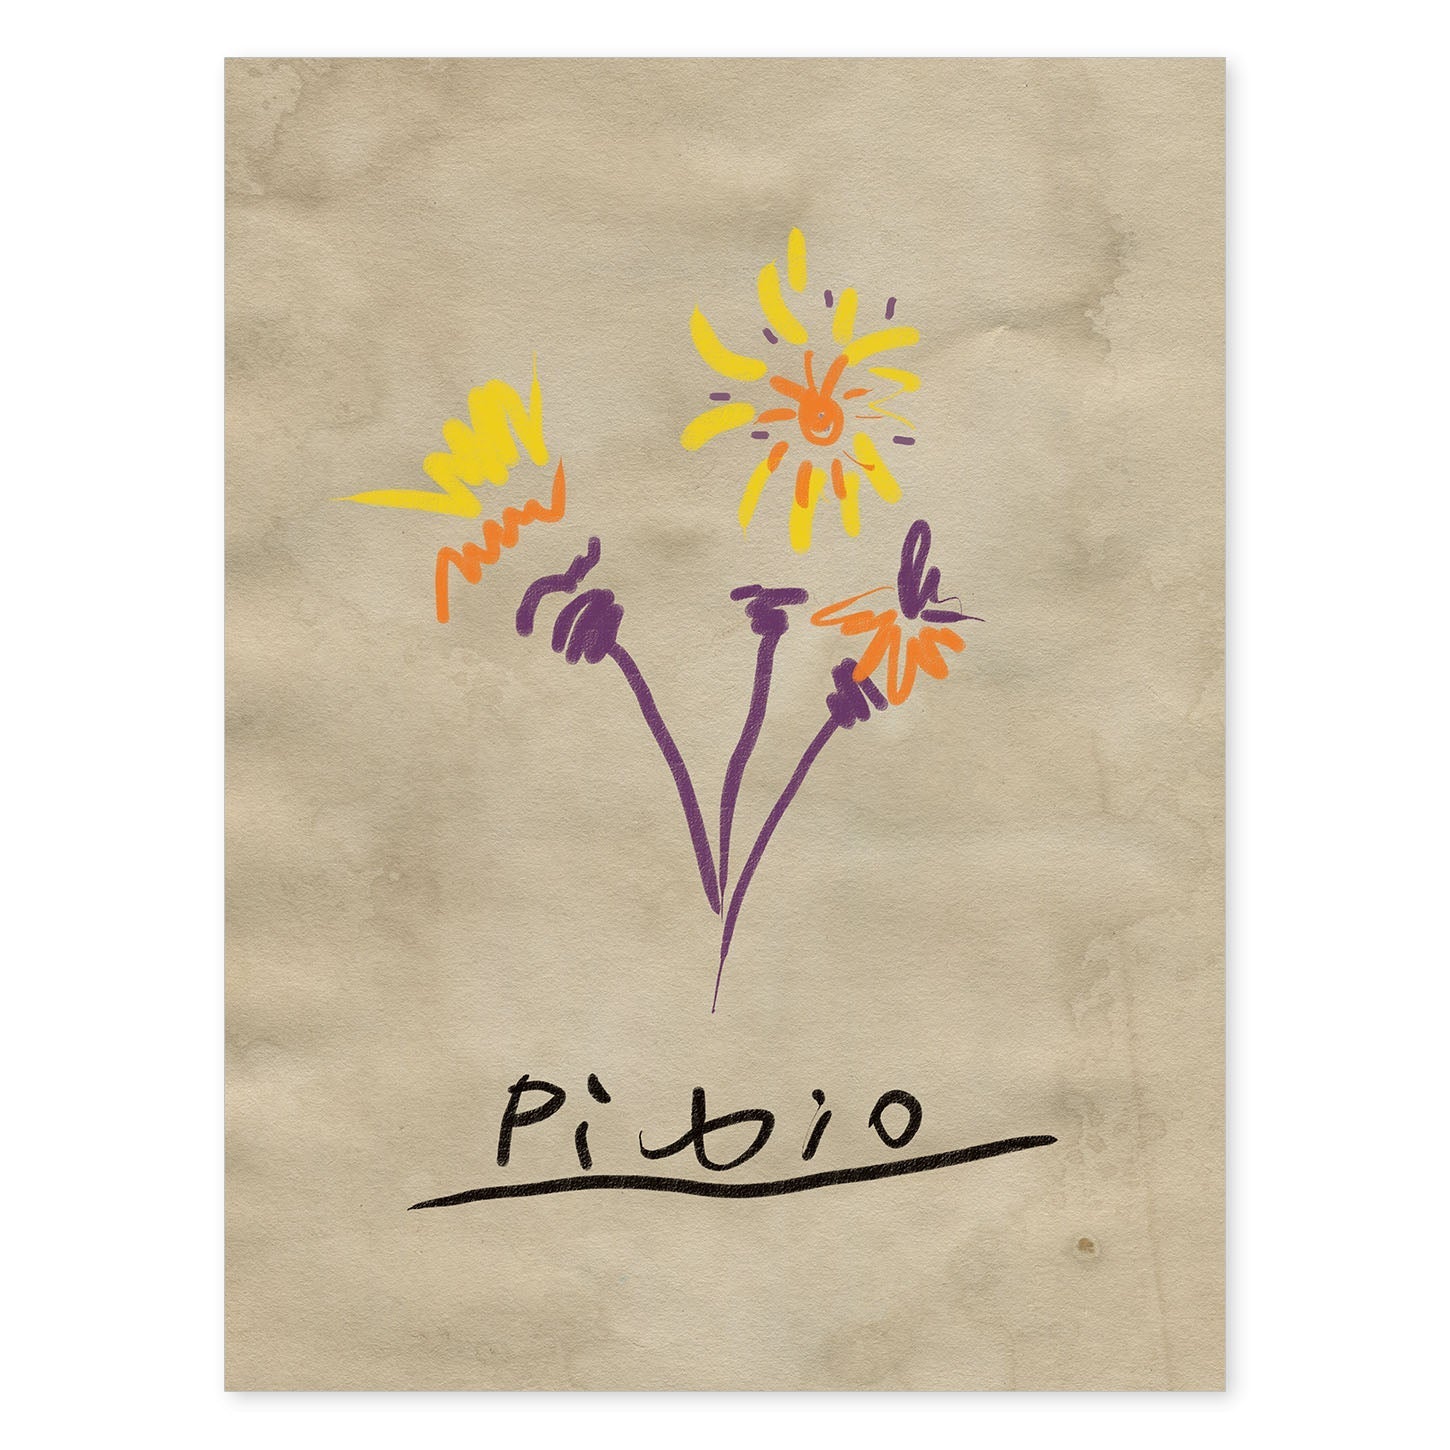 Lamina artistica decorativa con ilustración de Exposición Picasso 2-Artwork-Nacnic-A4-Sin marco-Nacnic Estudio SL